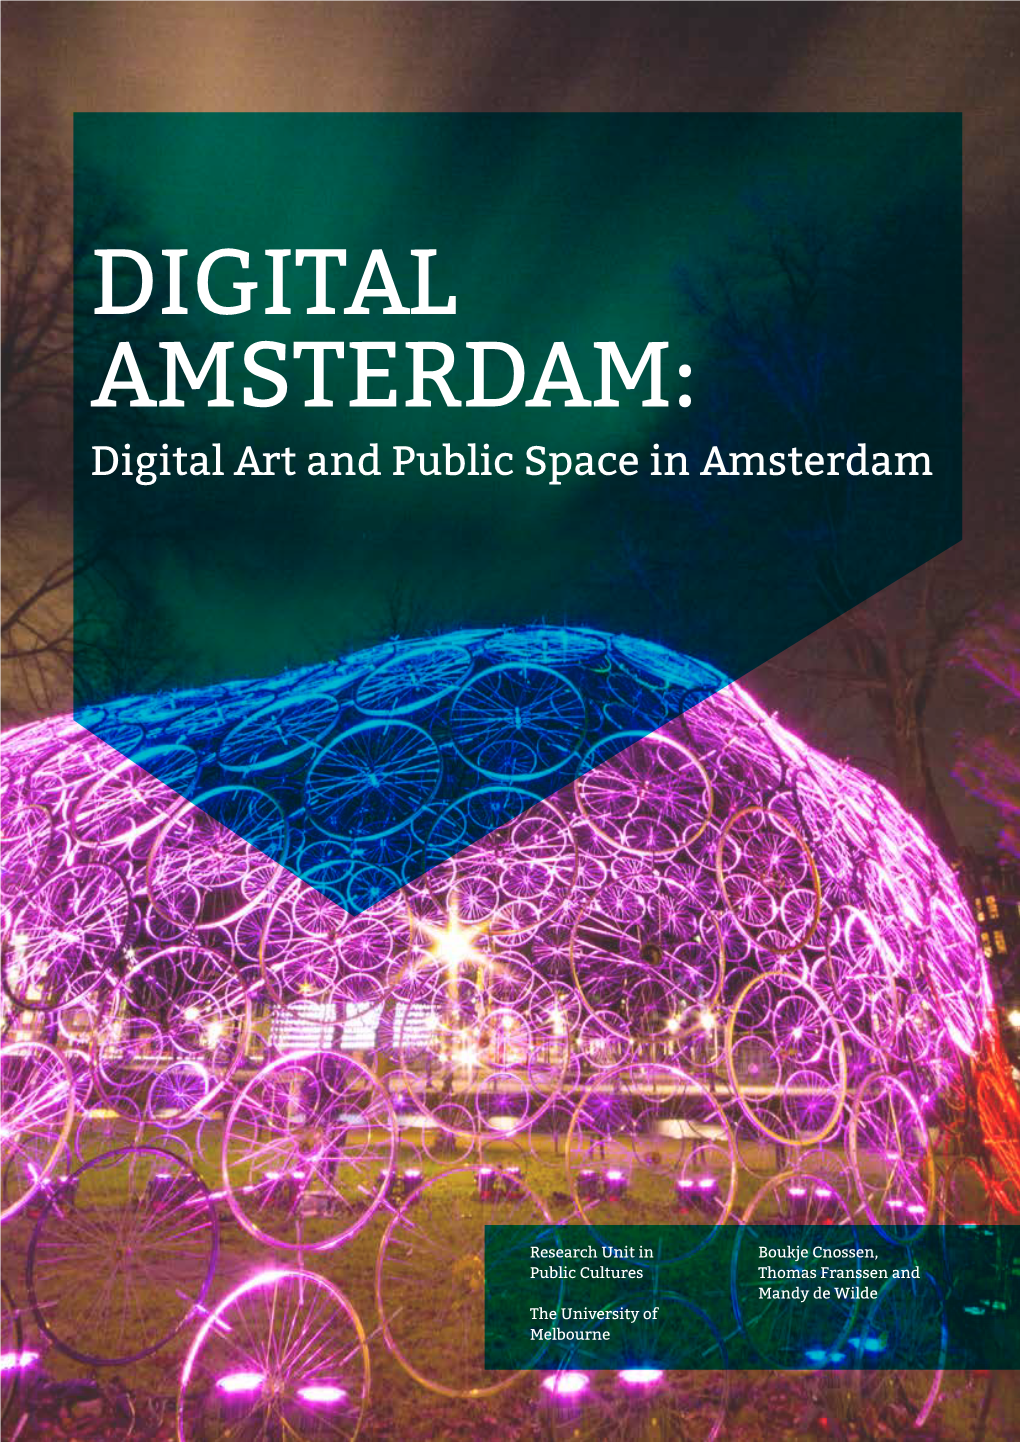 DIGITAL AMSTERDAM: Digital Art and Public Space in Amsterdam